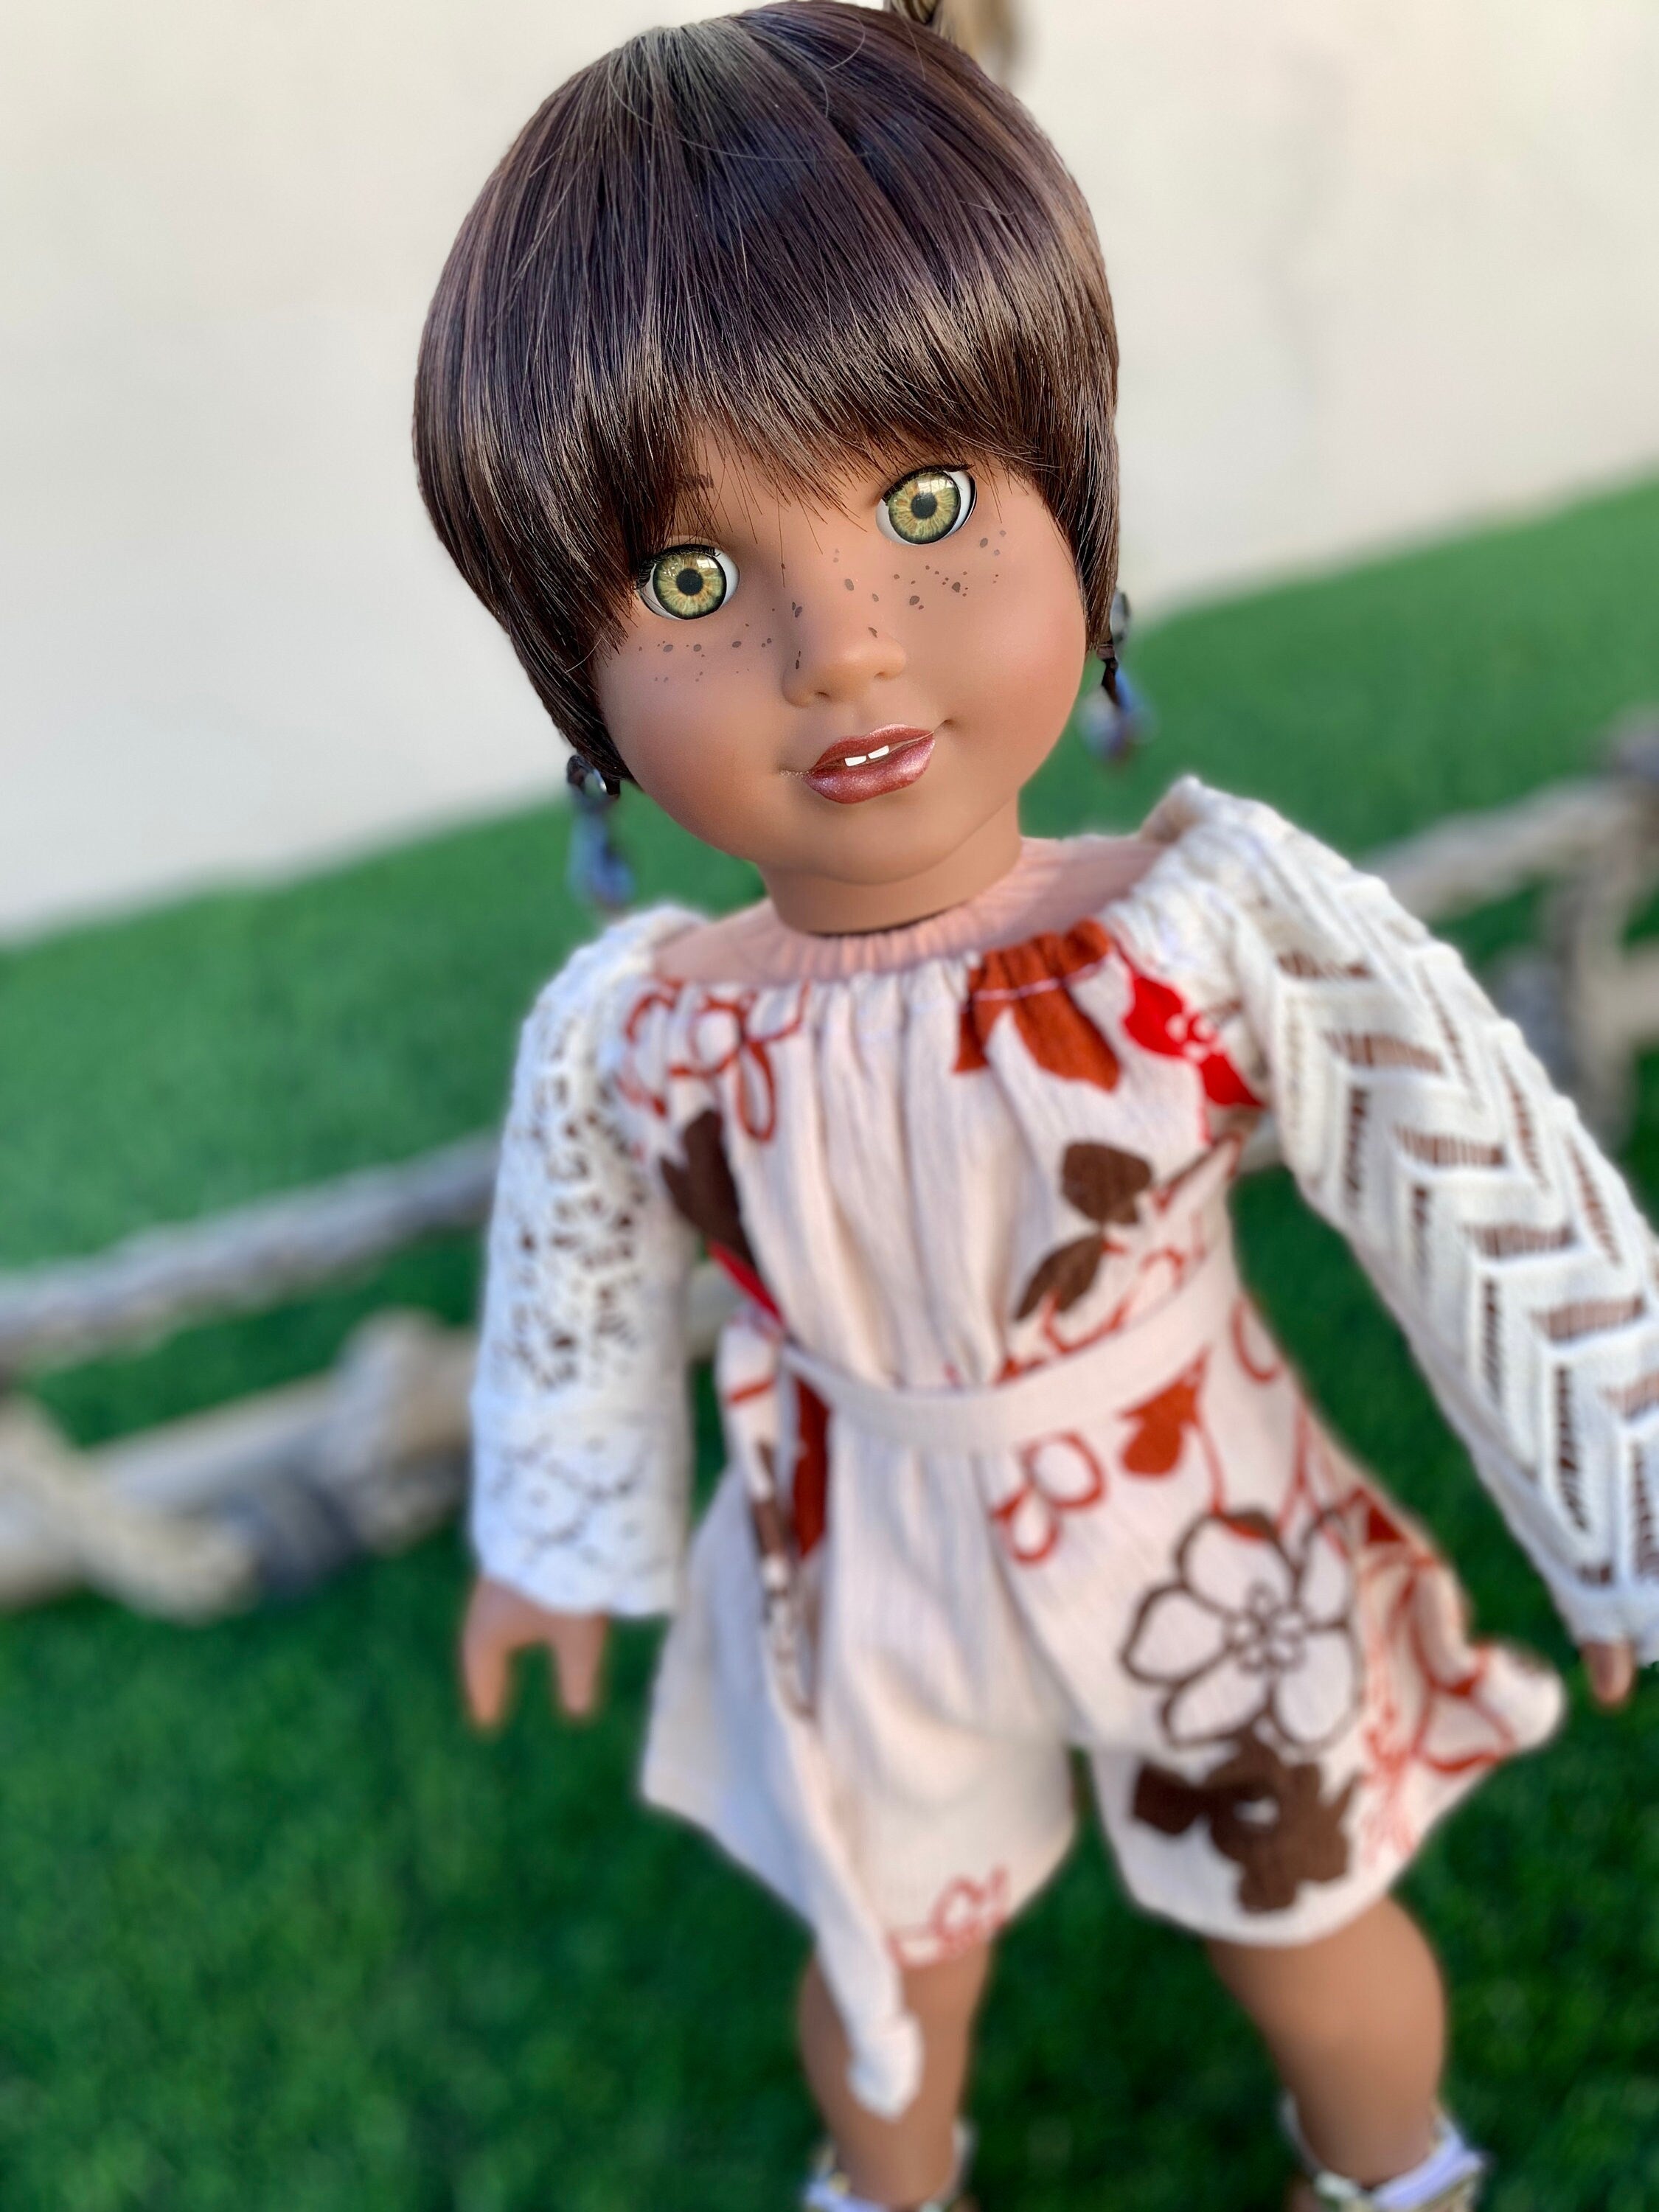 Custom doll wig for 18" American Girl Dolls - Heat Safe - Tangle Resistant - fits 10-11" head size of 18" dolls OG Blythe BJD Gotz Pixie